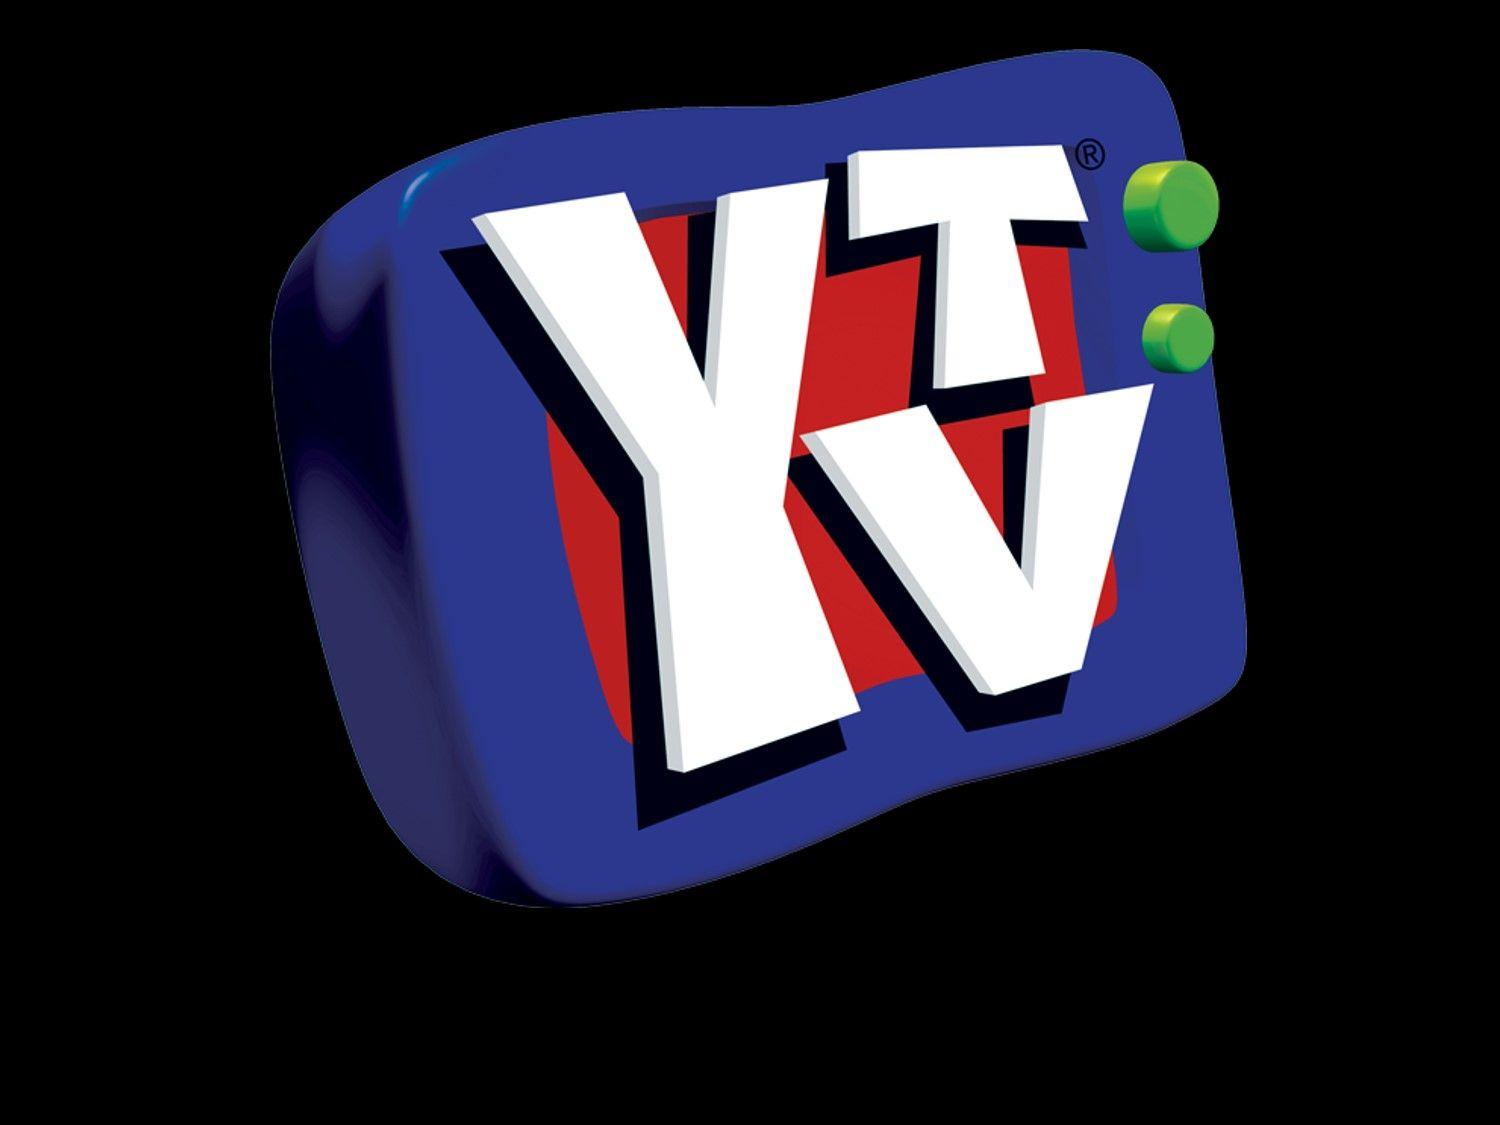 Ytv Logo - Image - YTV logo (2004).jpg | Logopedia | FANDOM powered by Wikia